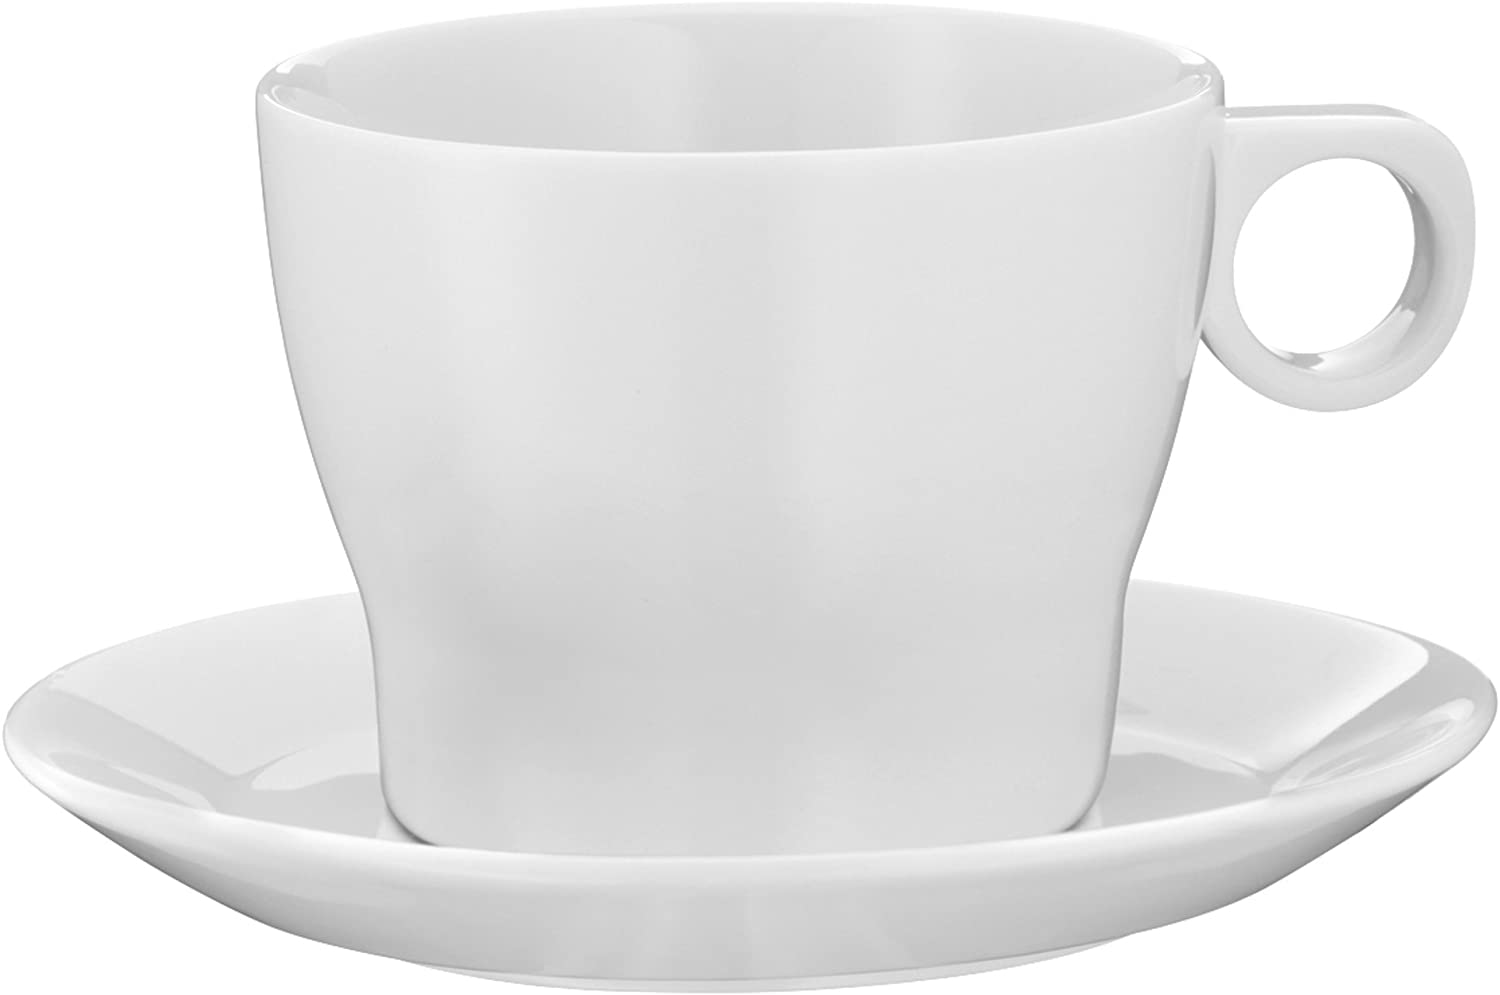 WMF Barista Café au Lait Cup 225 ml, Coffee Cup with Saucer, Coffee Glass, Porcelain, Dishwasher Safe